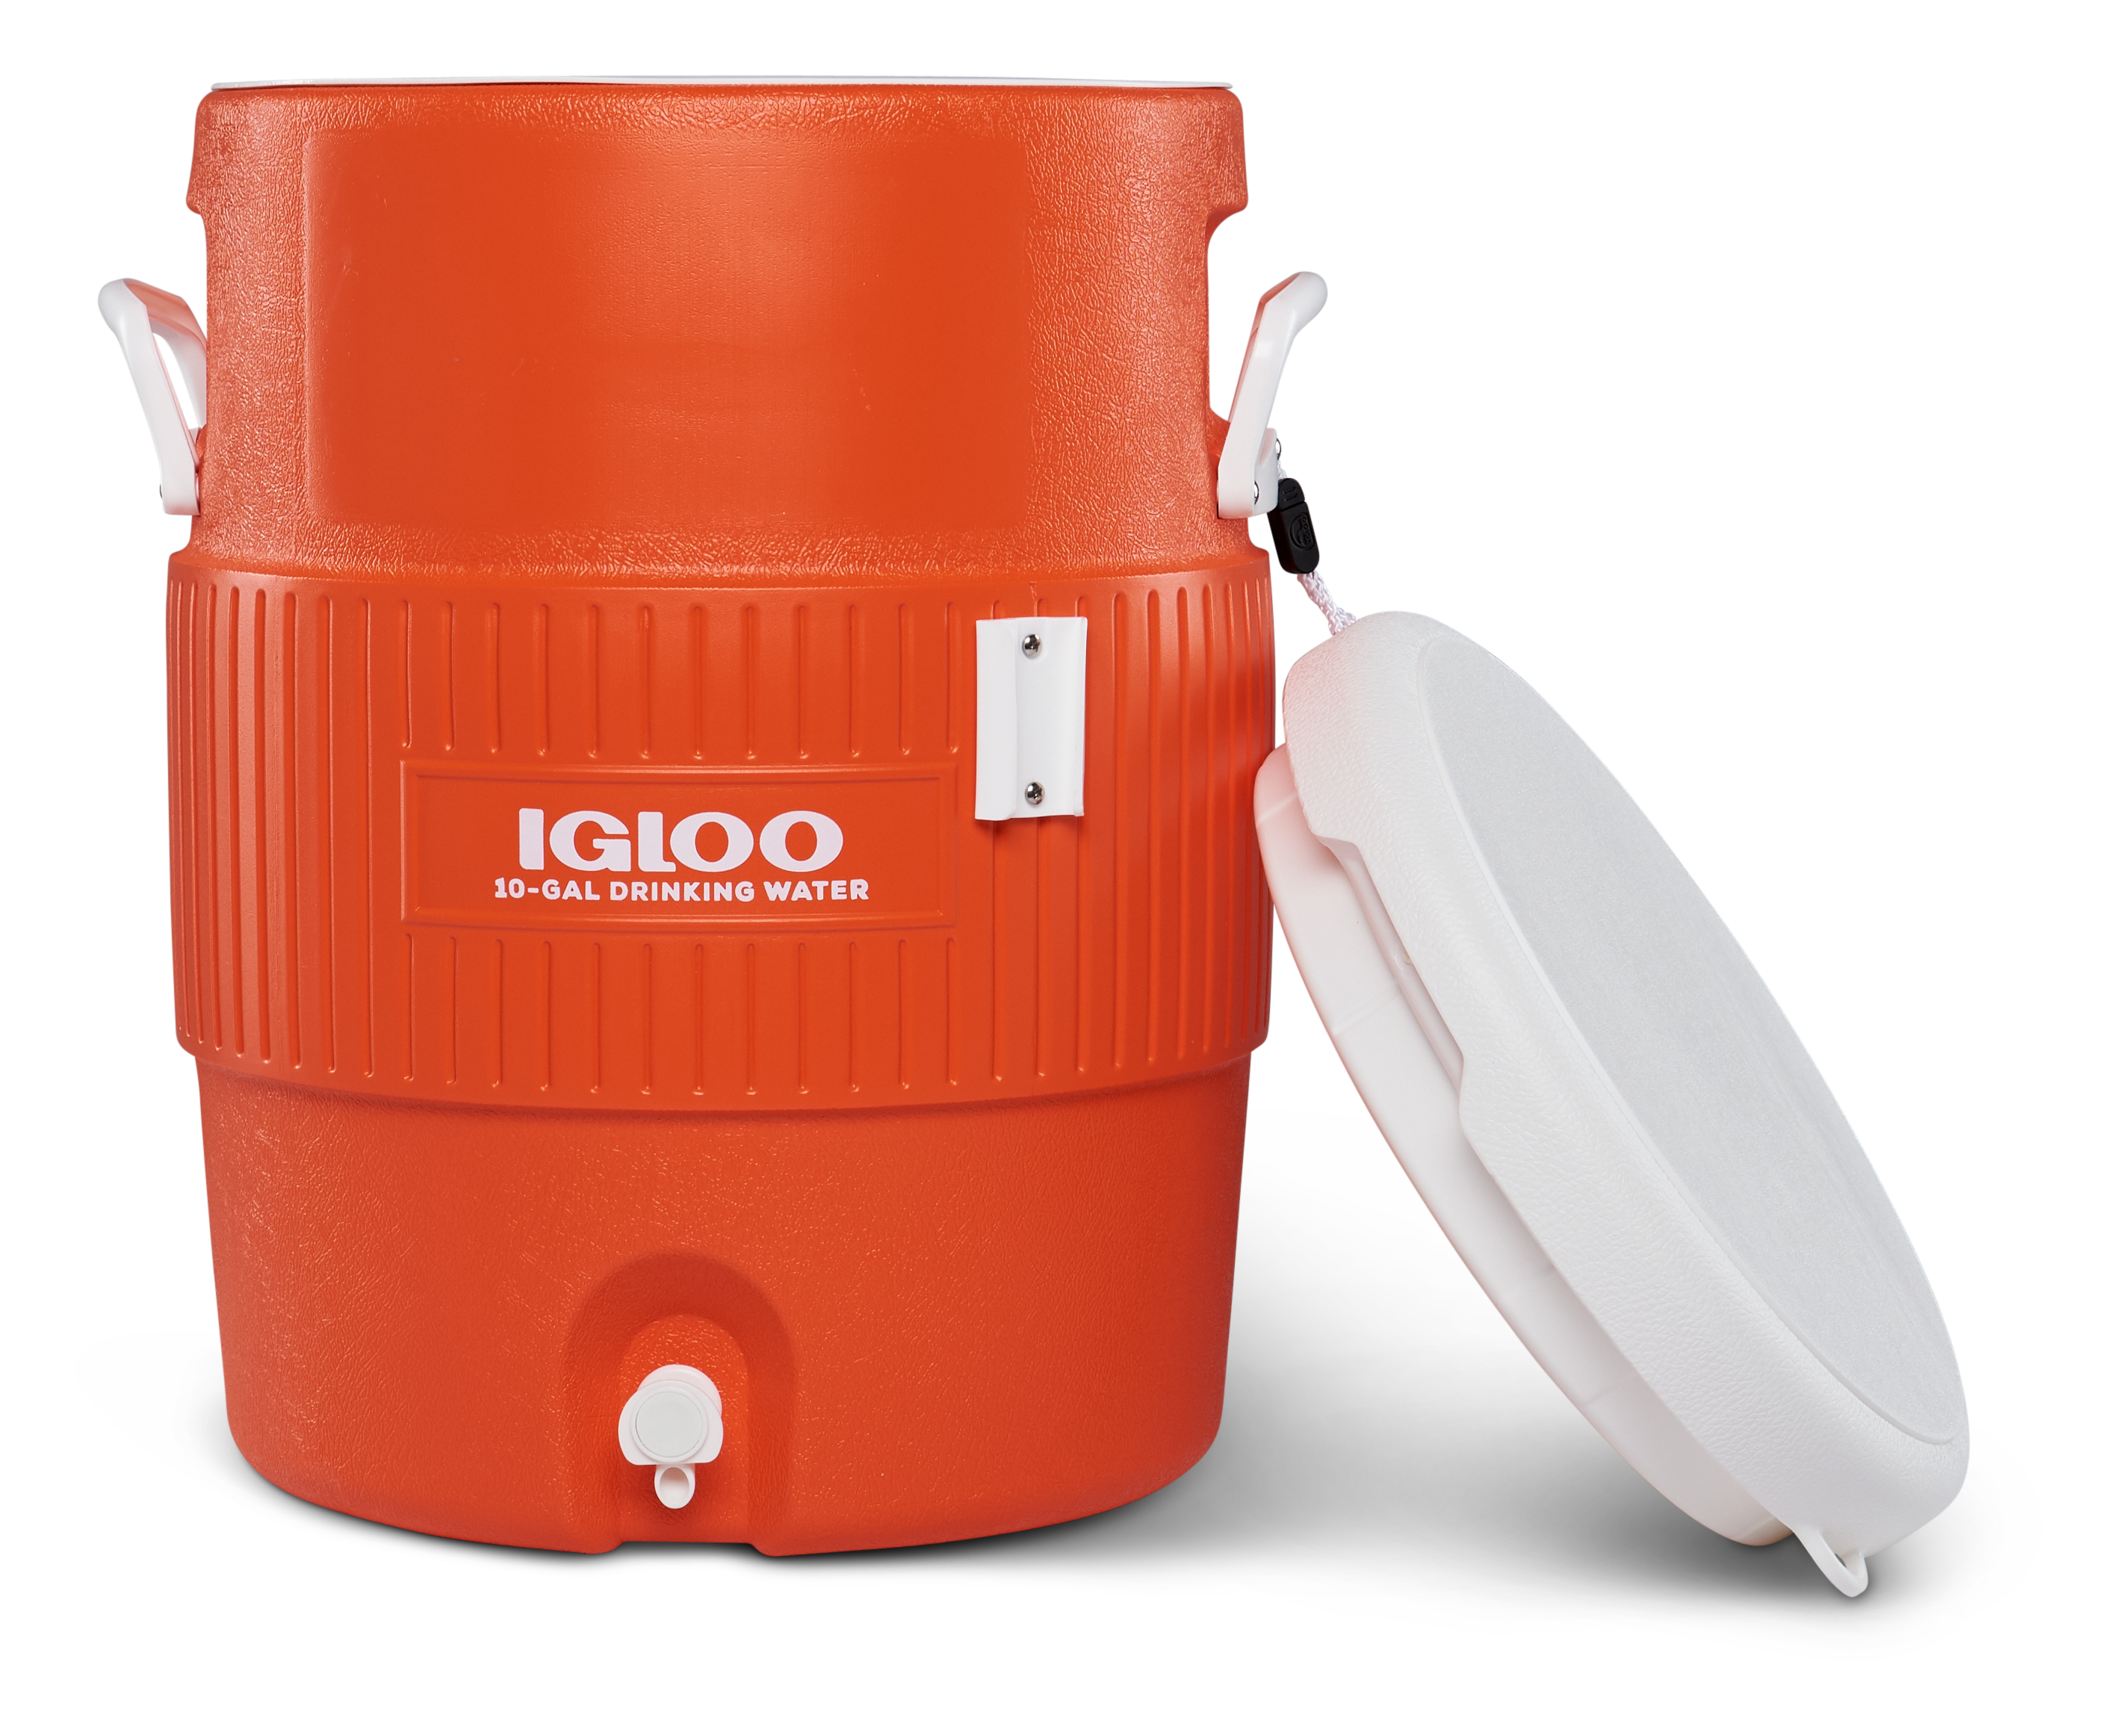 Igloo 10-Gallon Seat Top Water Jug with Cup Dispenser, Orange - image 2 of 6